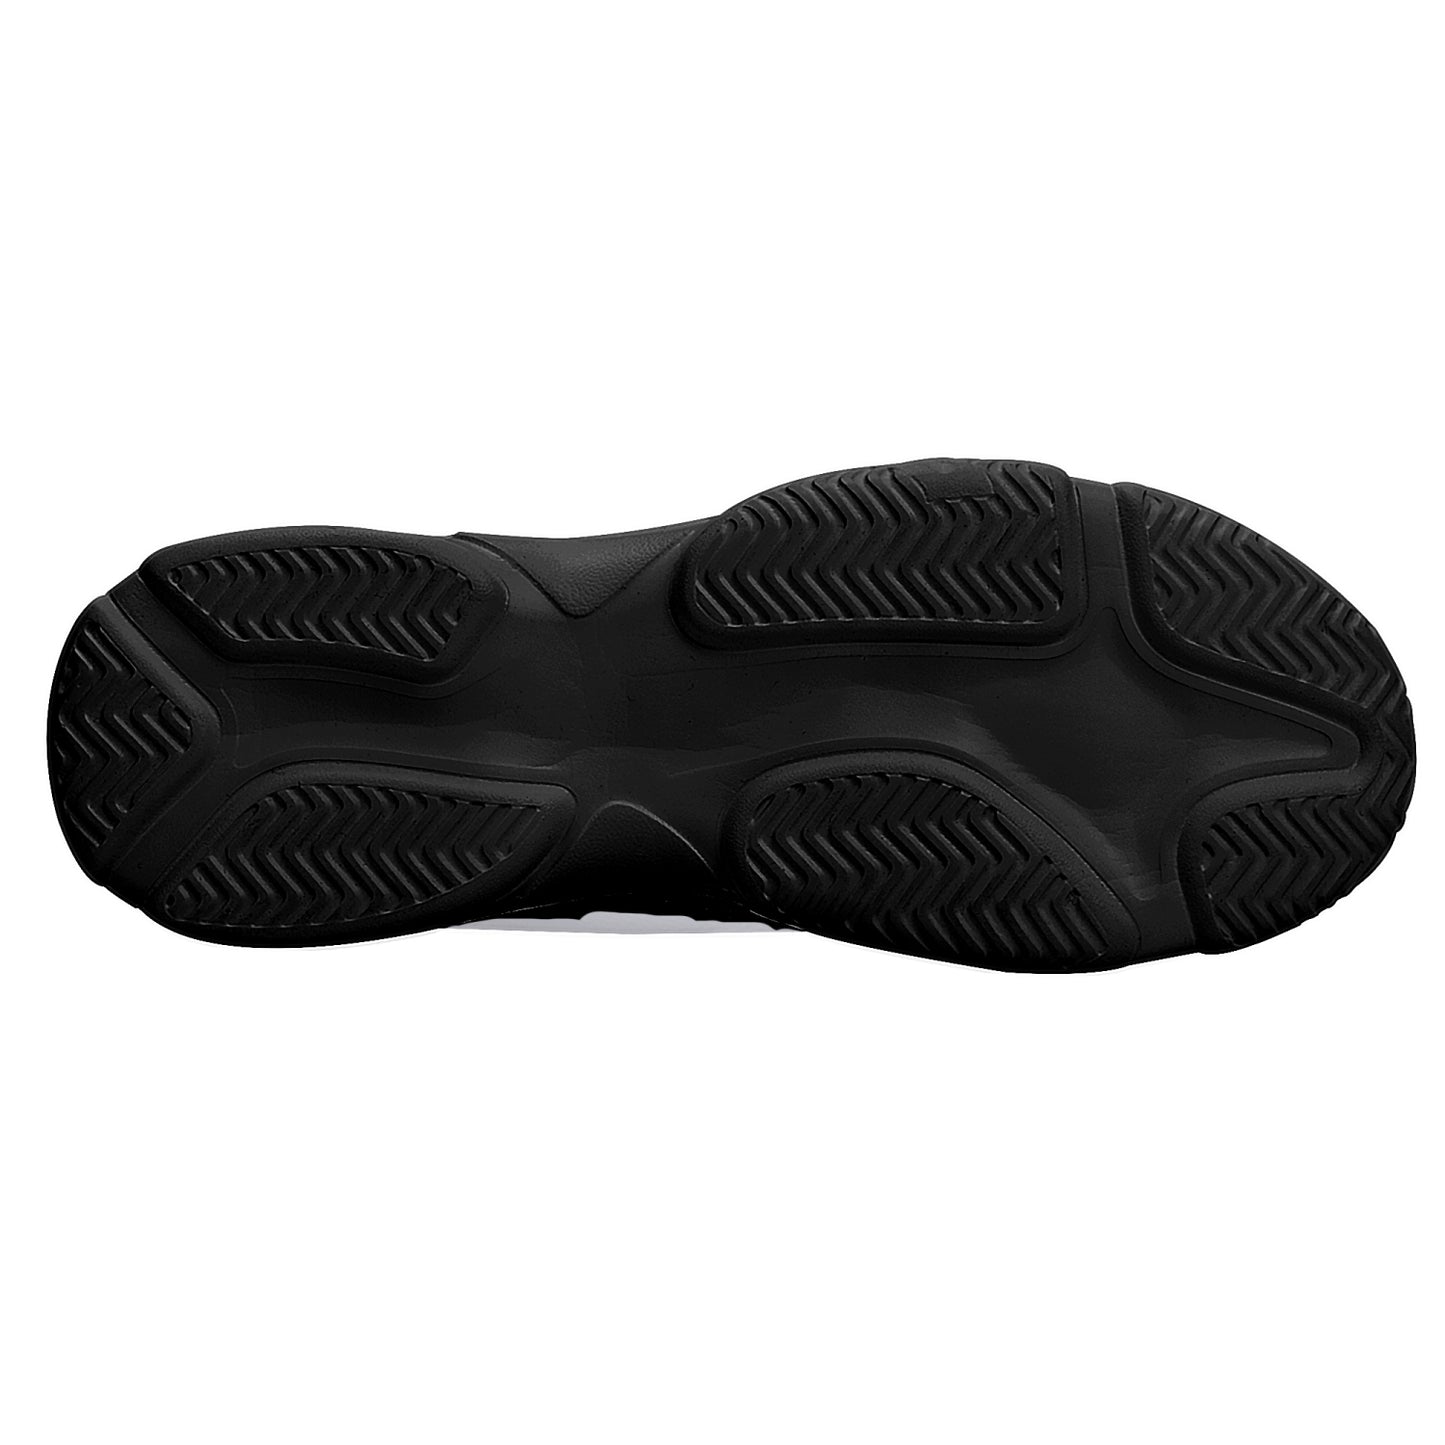 Zapatillas unisex "Redone" (blanco / negro)